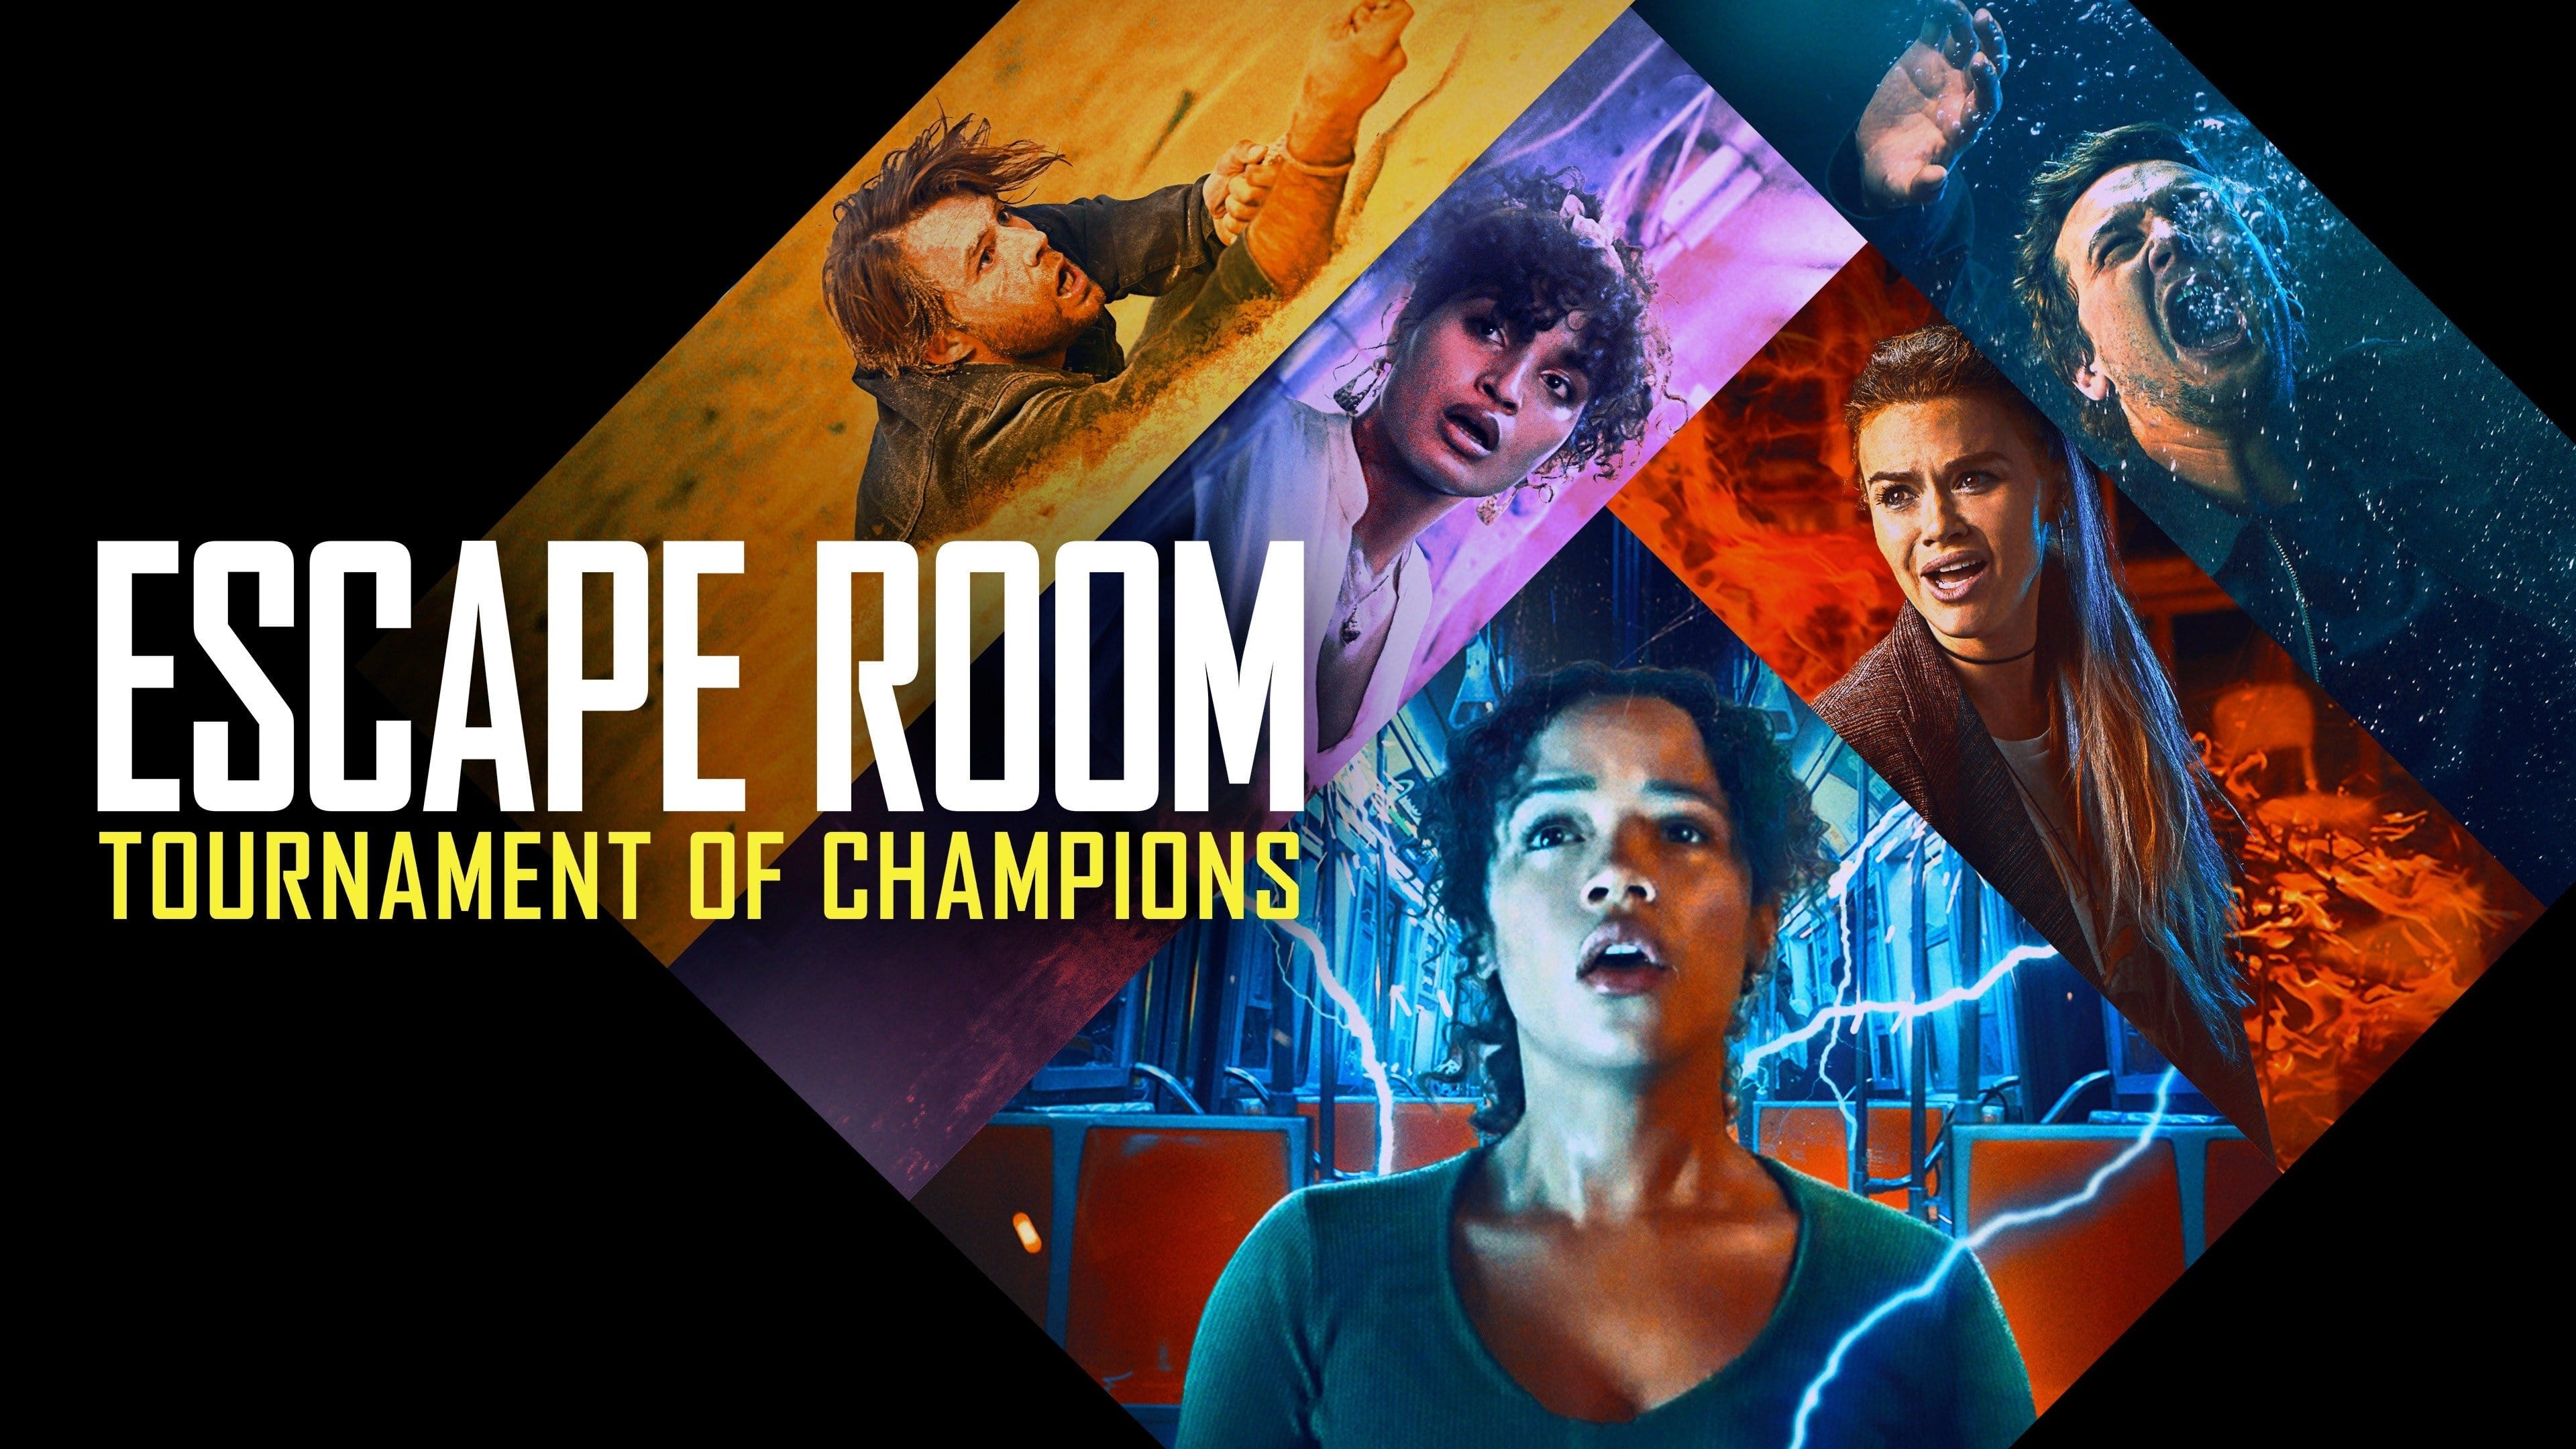 escape room: tournament of champions movie download